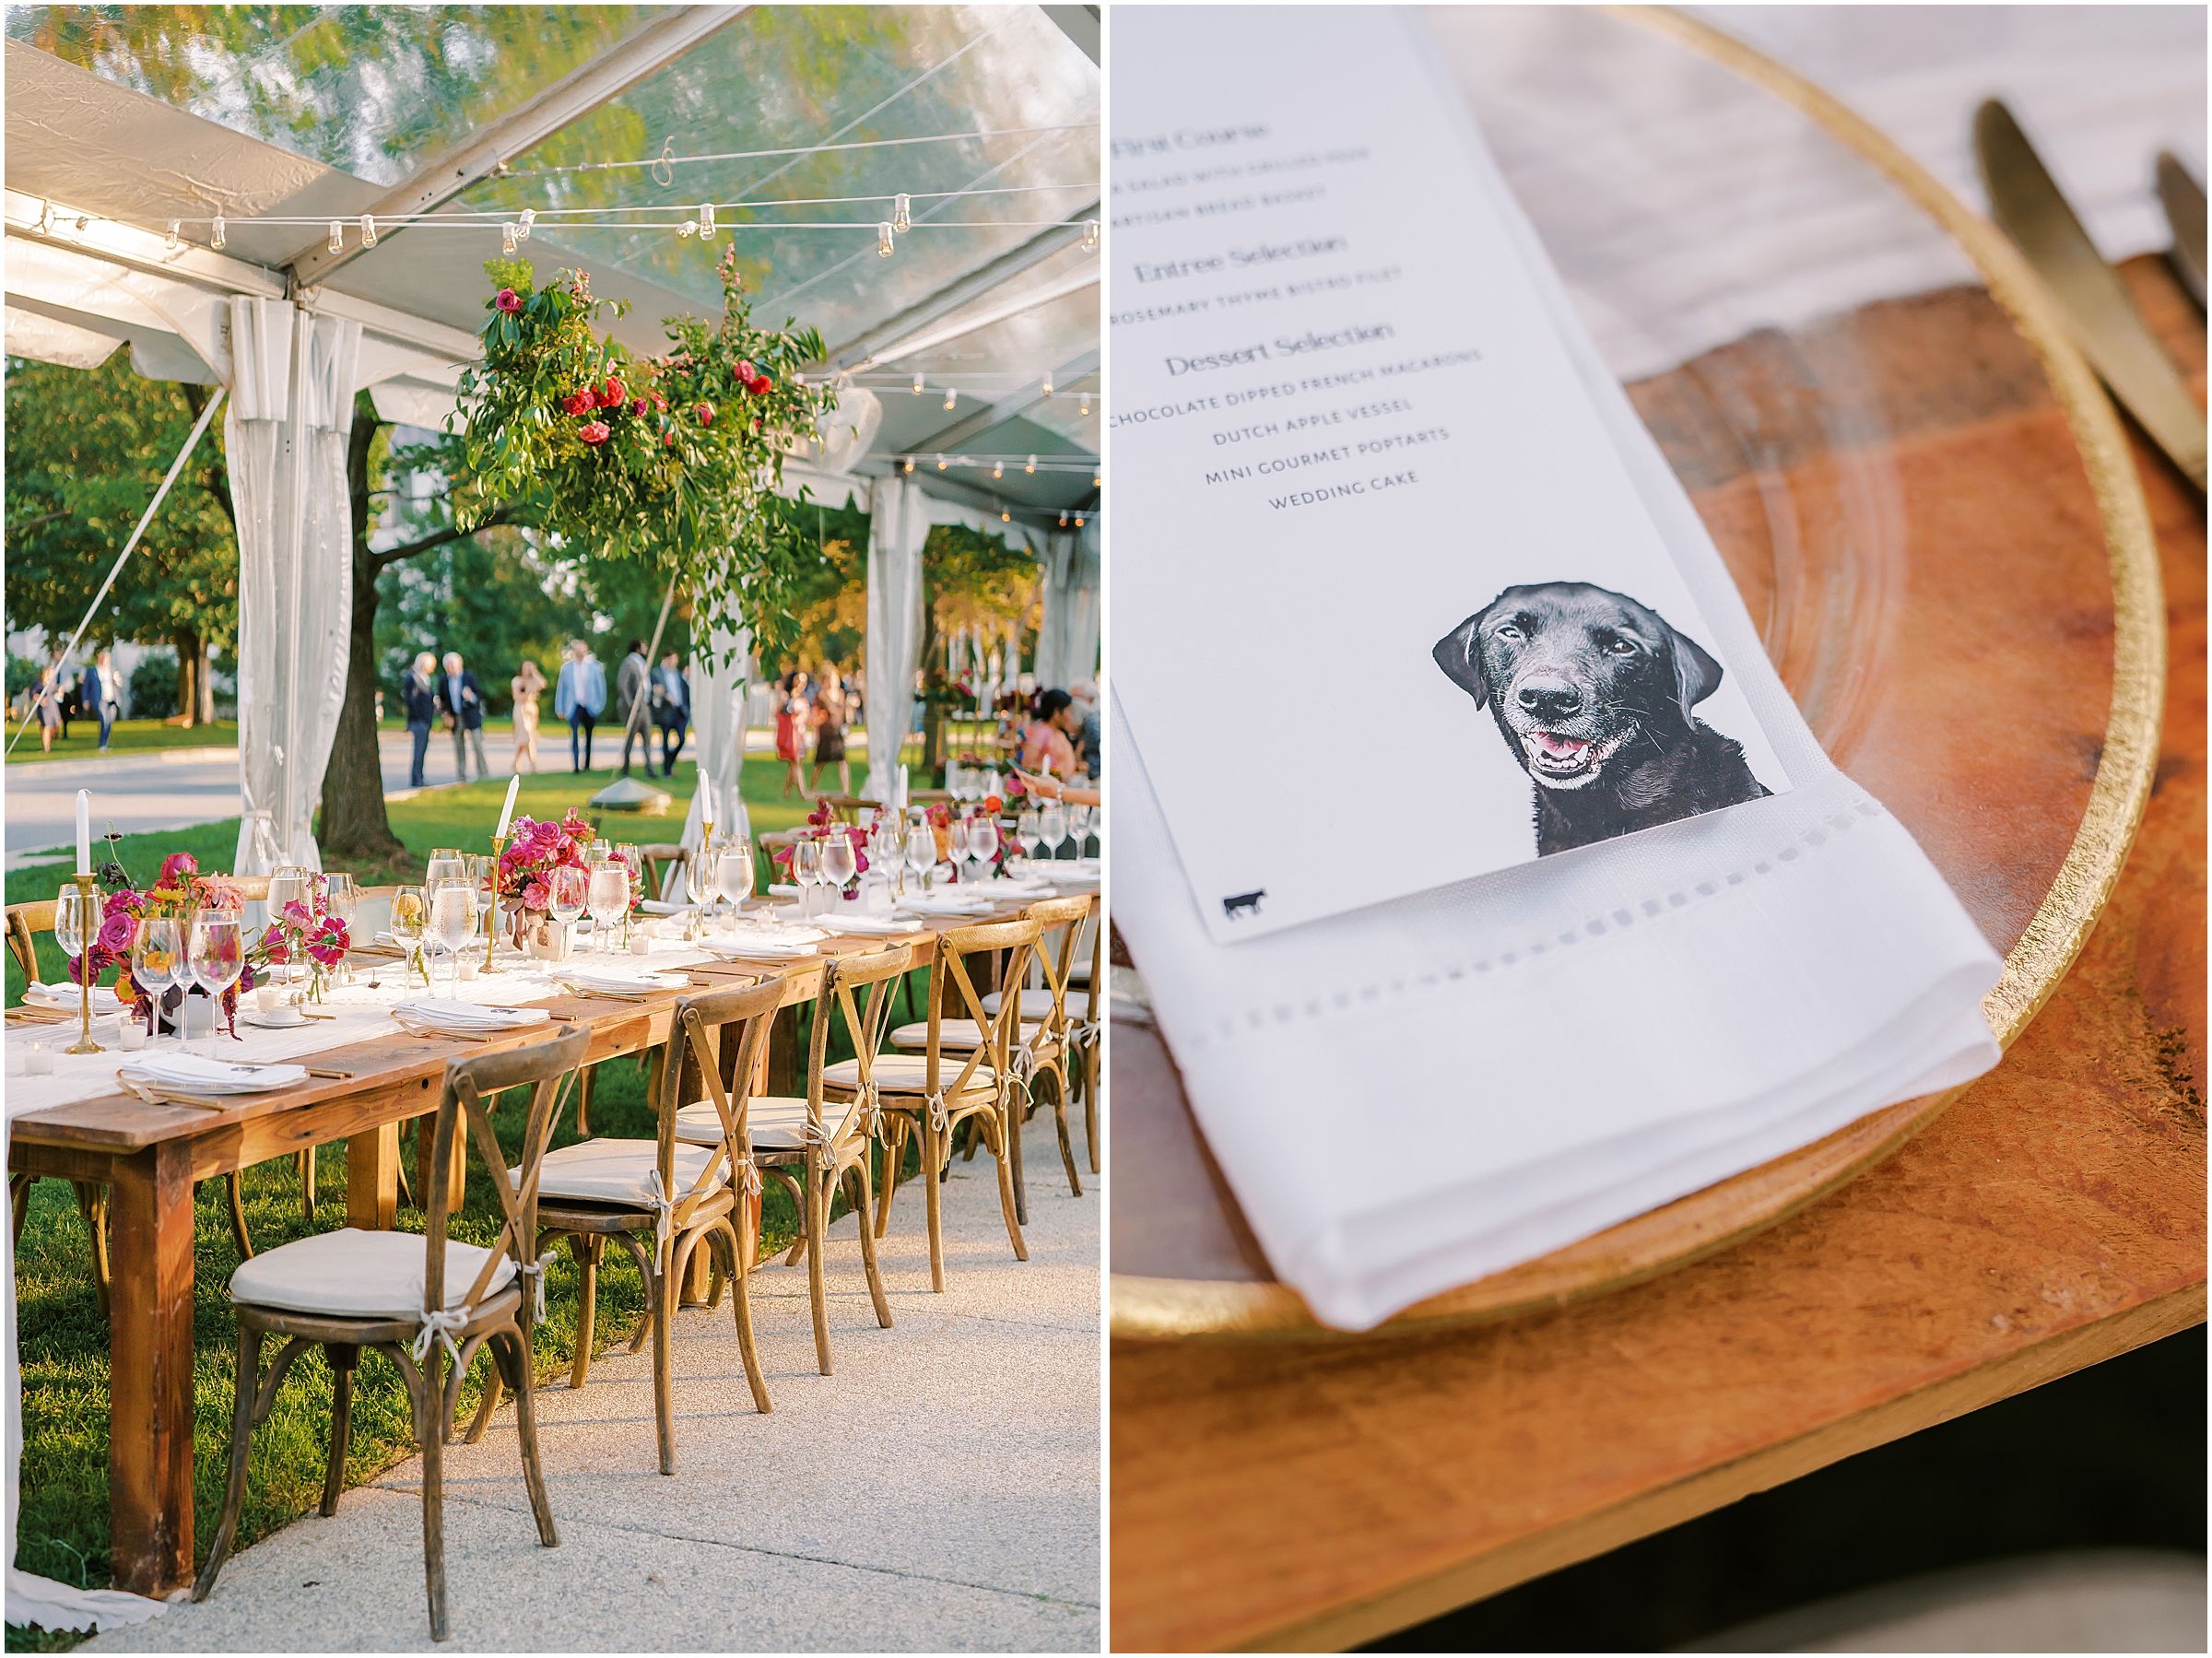 Wedding reception decor and custom menus with dog portrait